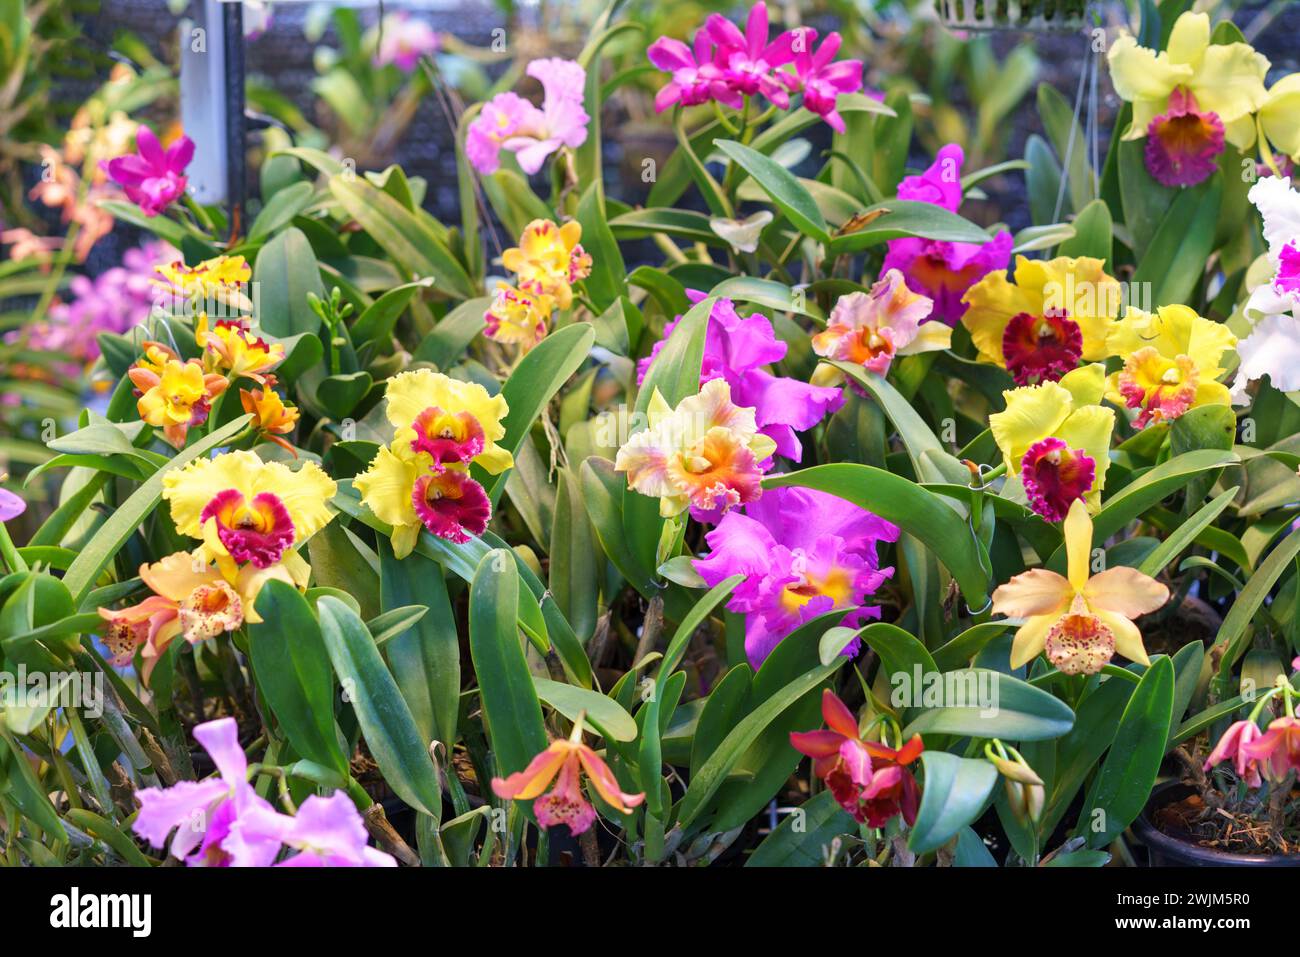 Una splendida collezione di orchidee Cattleya in una varietà di colori vivaci, in piena fioritura all'interno di una lussureggiante serra Foto Stock